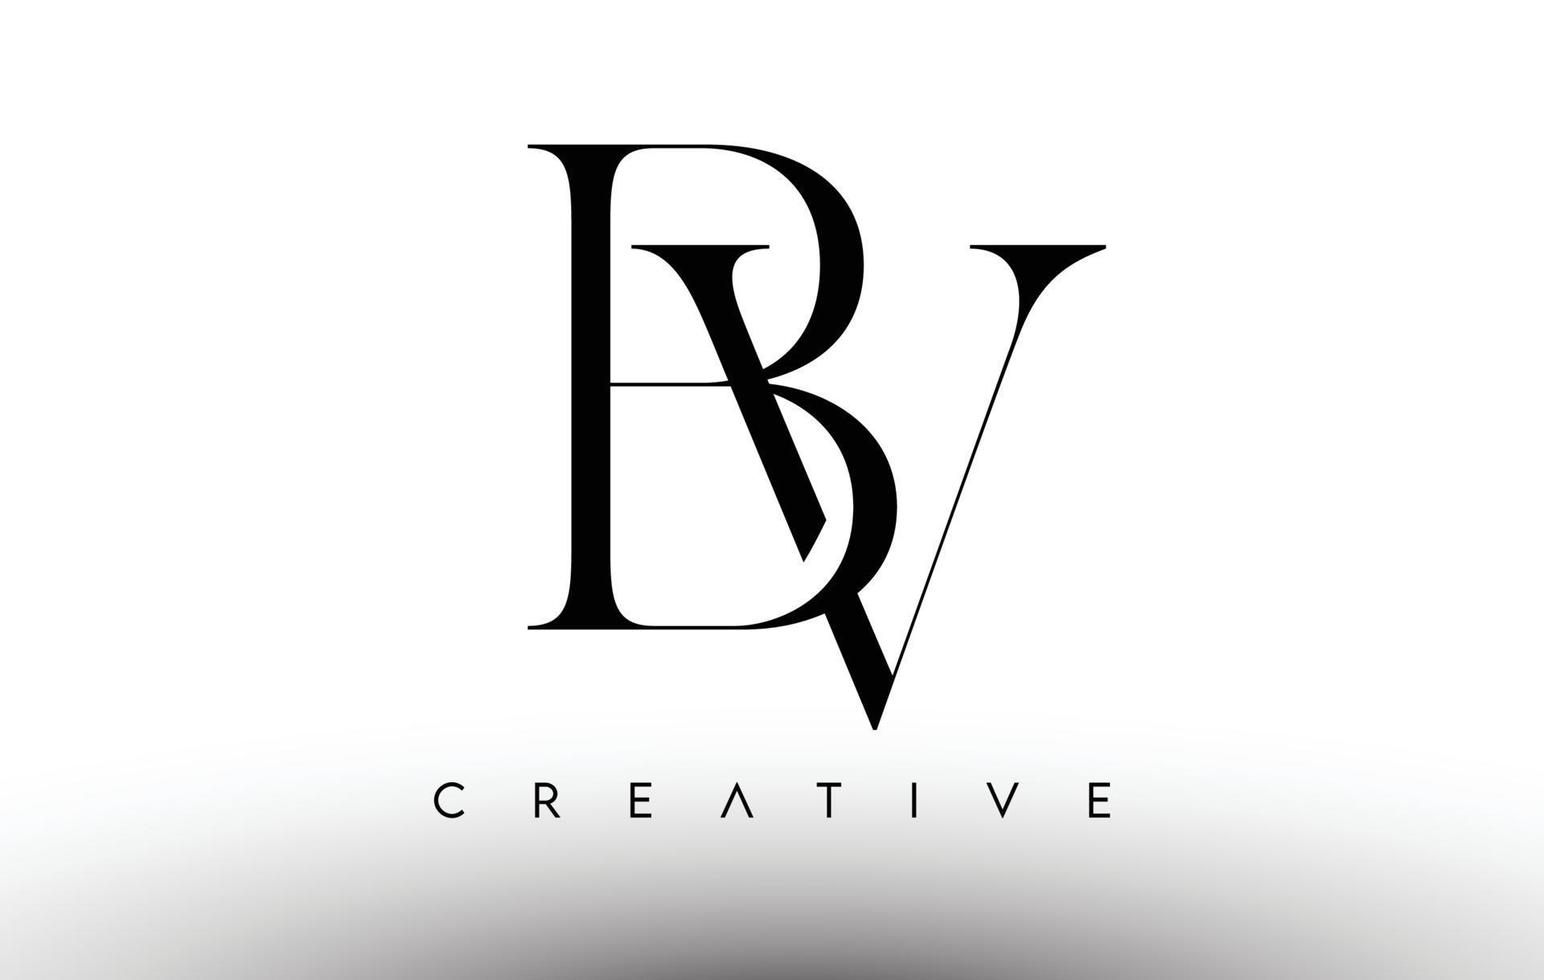 BV Minimalist Serif Modern Letter Logo in Black and White. BV Creative Serif Logo Design Icon Vector